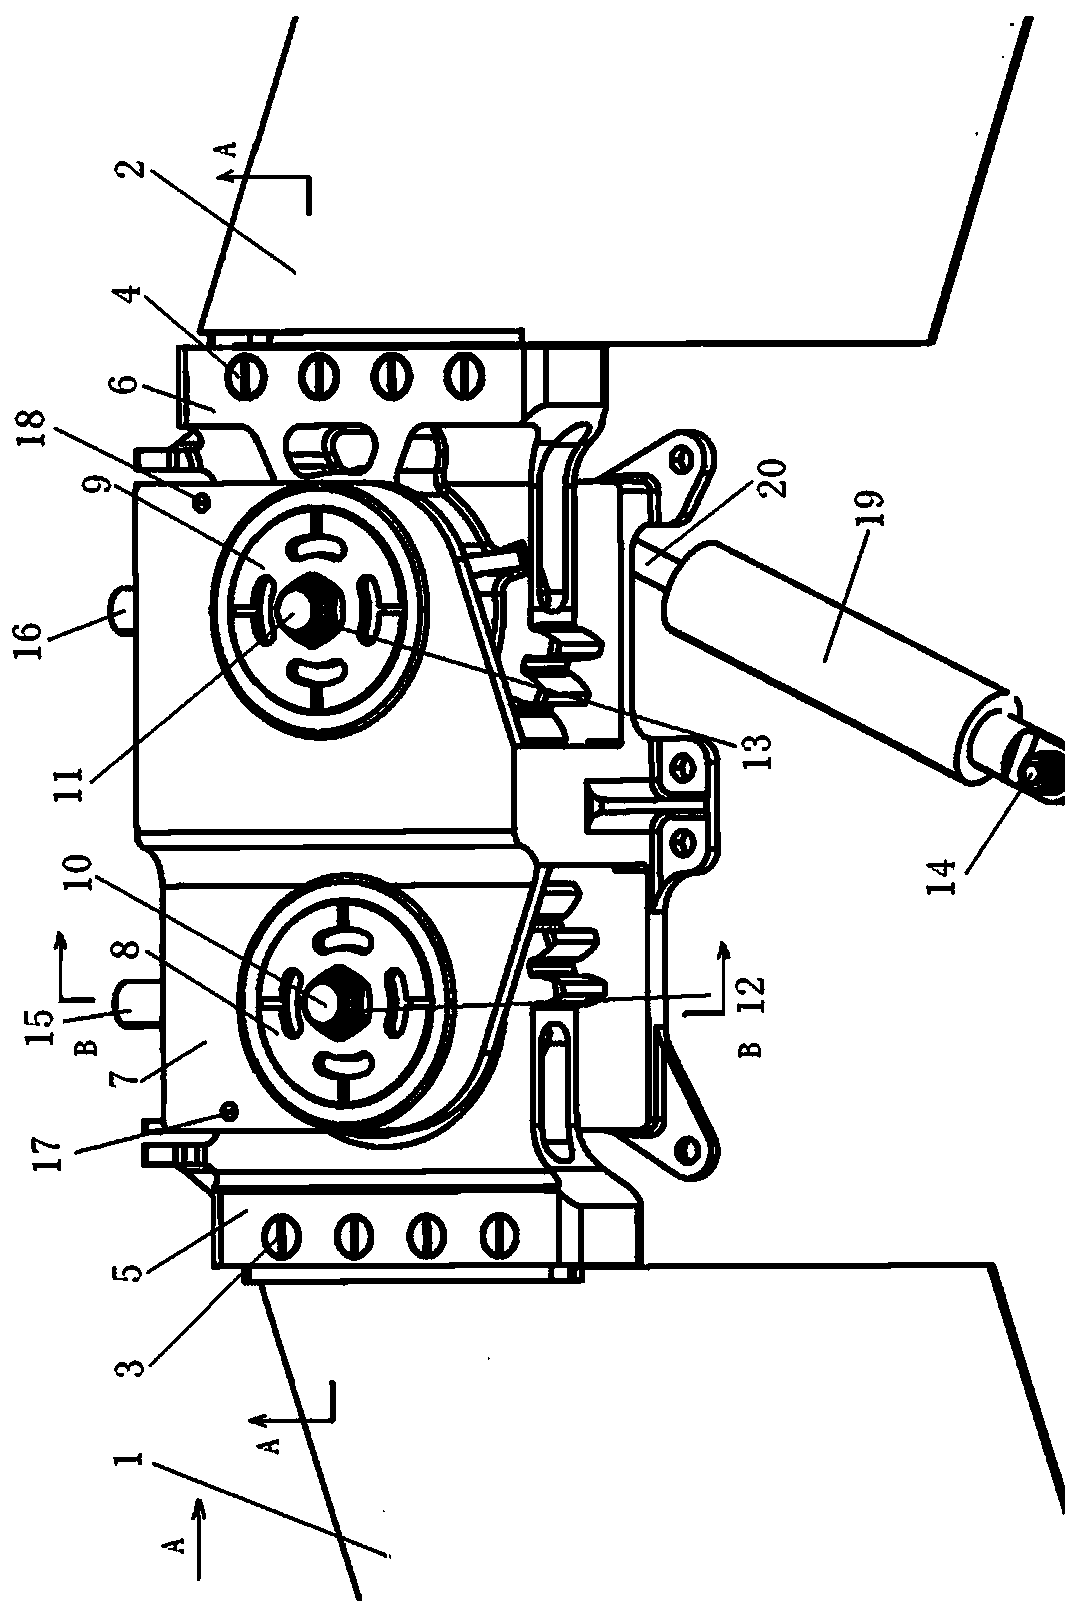 Missile wing gear transmission folding mechanism